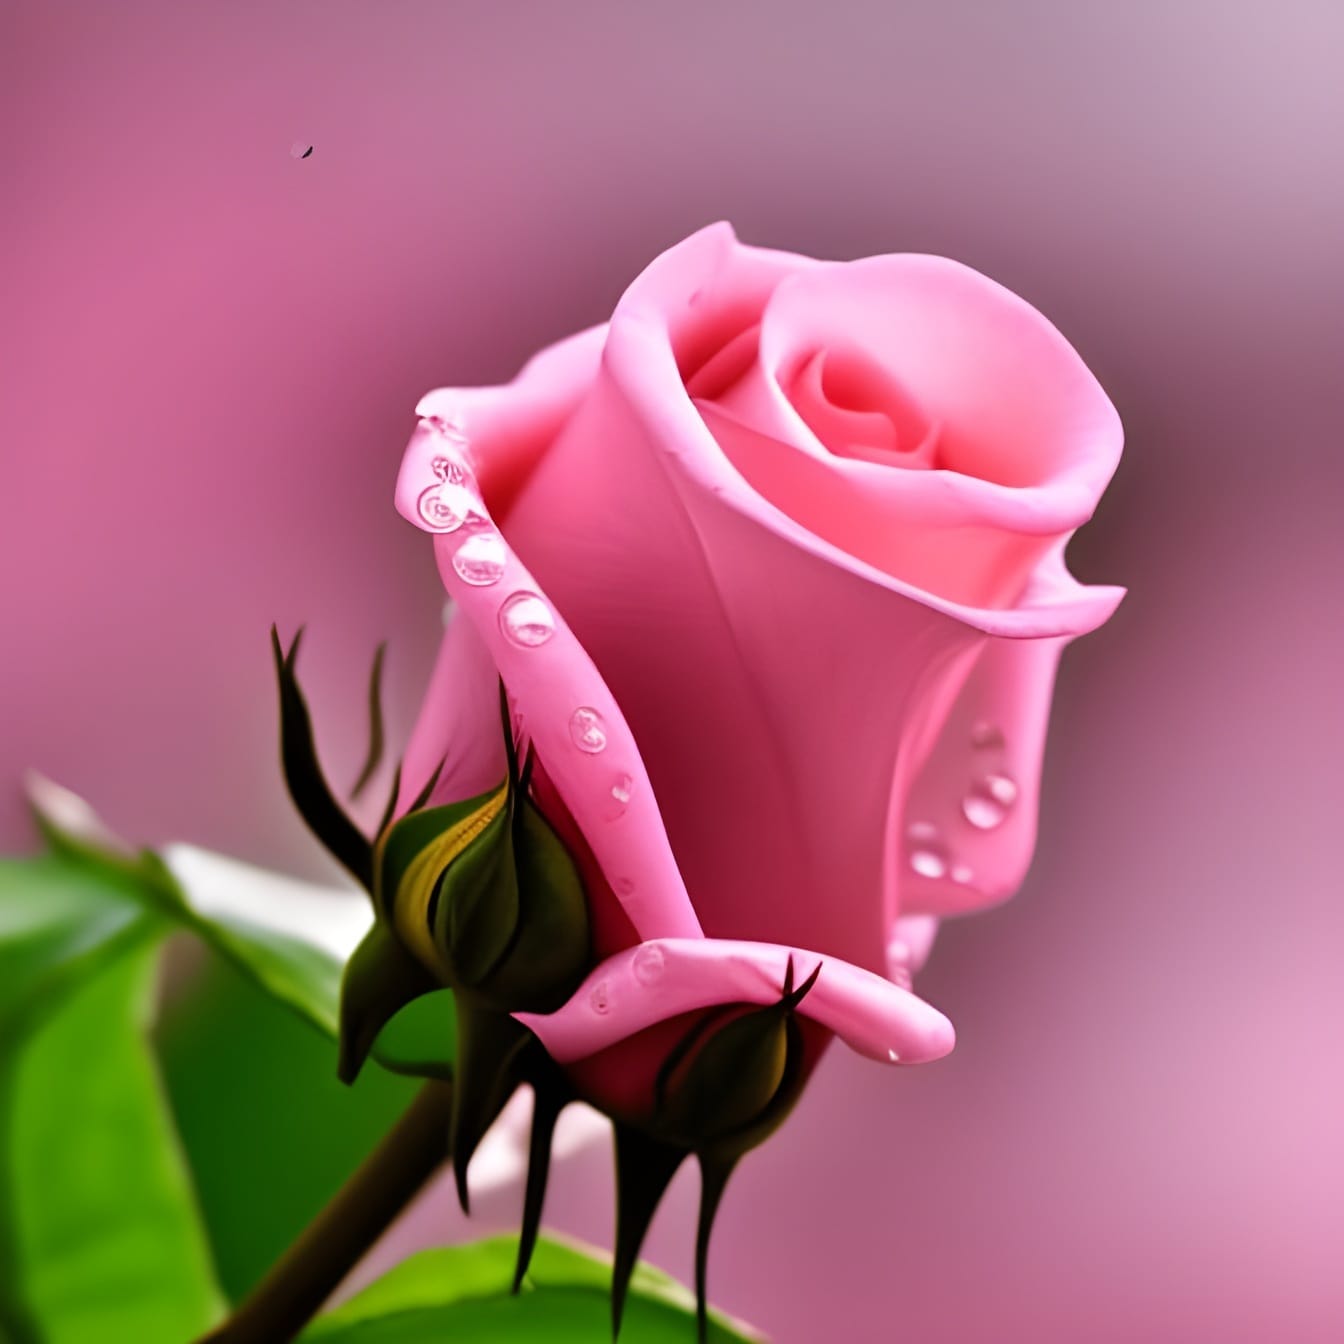 Capullo de rosa rosa con gotas de agua en pétalos de cerca: arte de inteligencia artificial